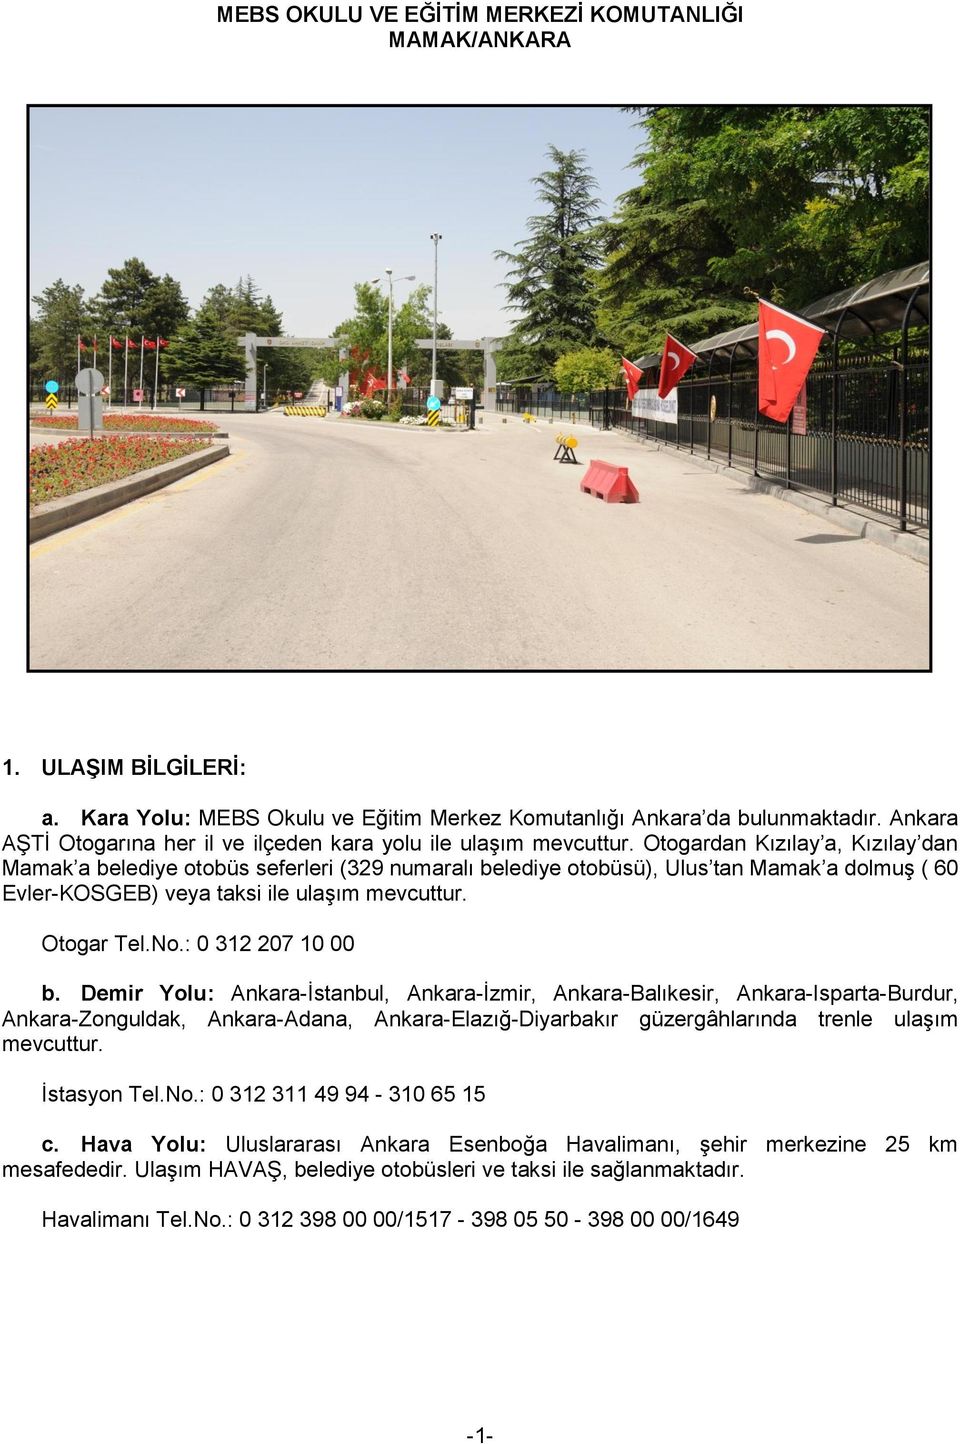 MEBS OKULU VE EĞİTİM MERKEZİ KOMUTANLIĞI MAMAK/ANKARA - PDF Free Download